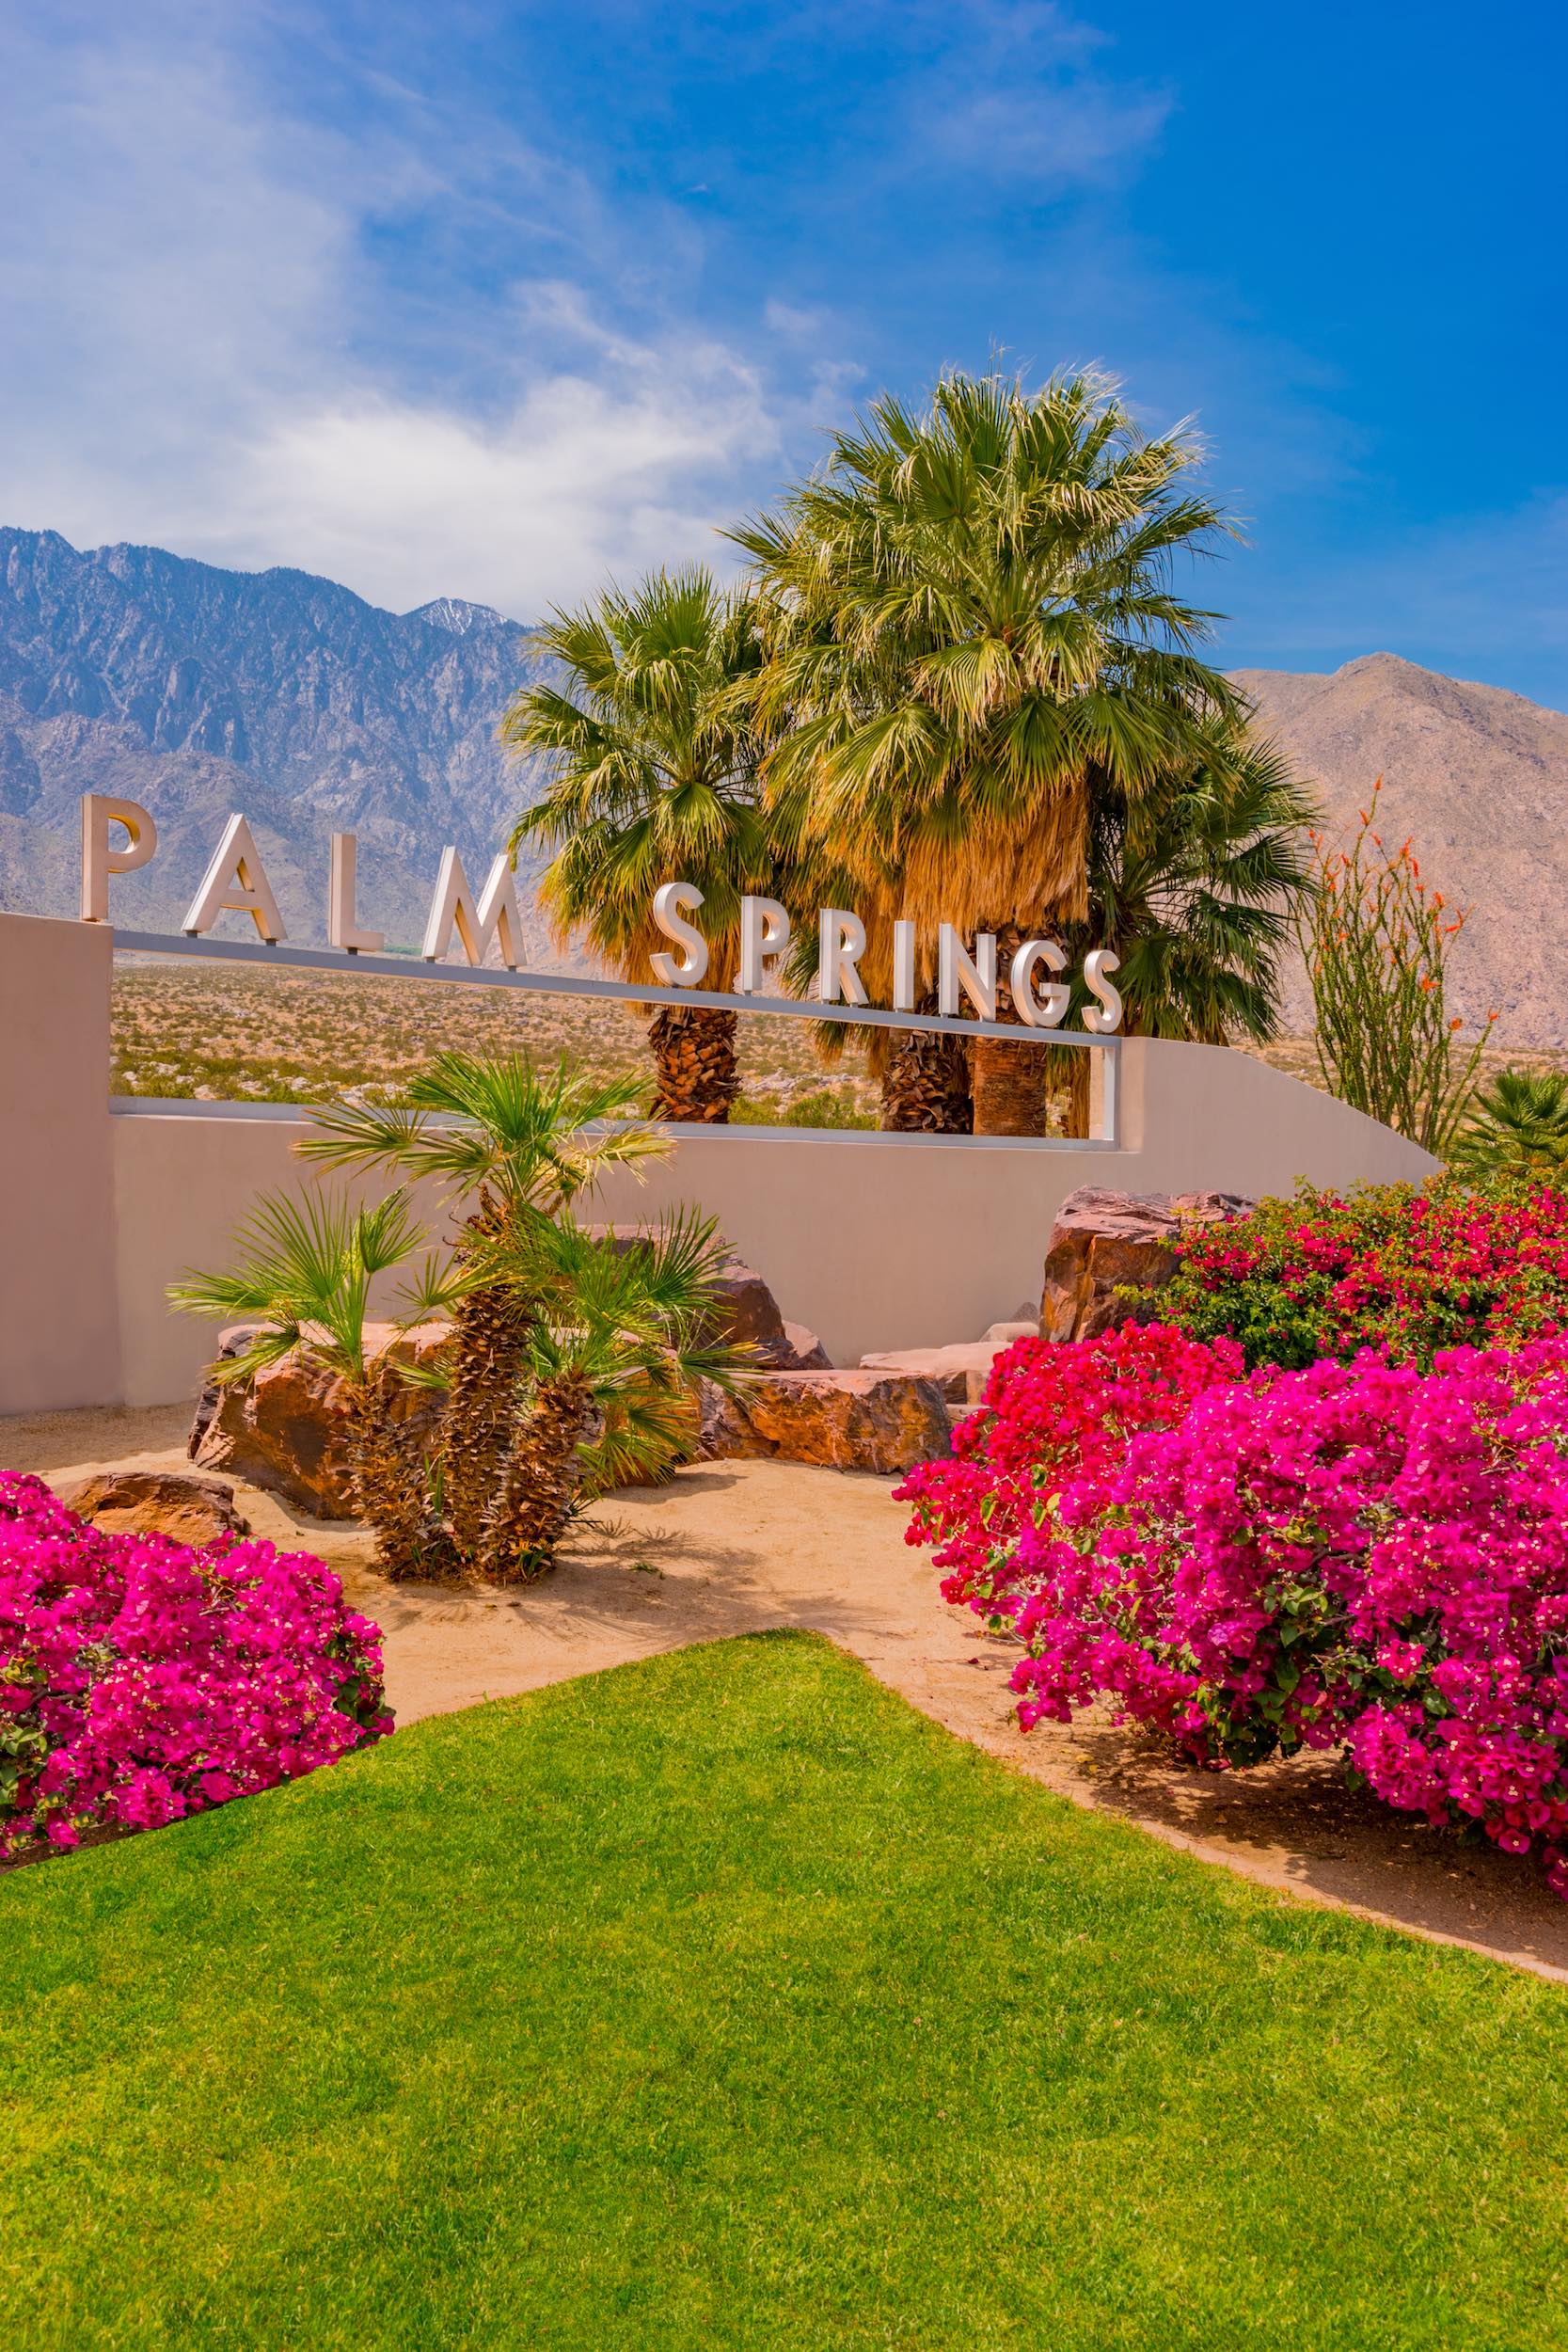 Palm Springs Movie Locations